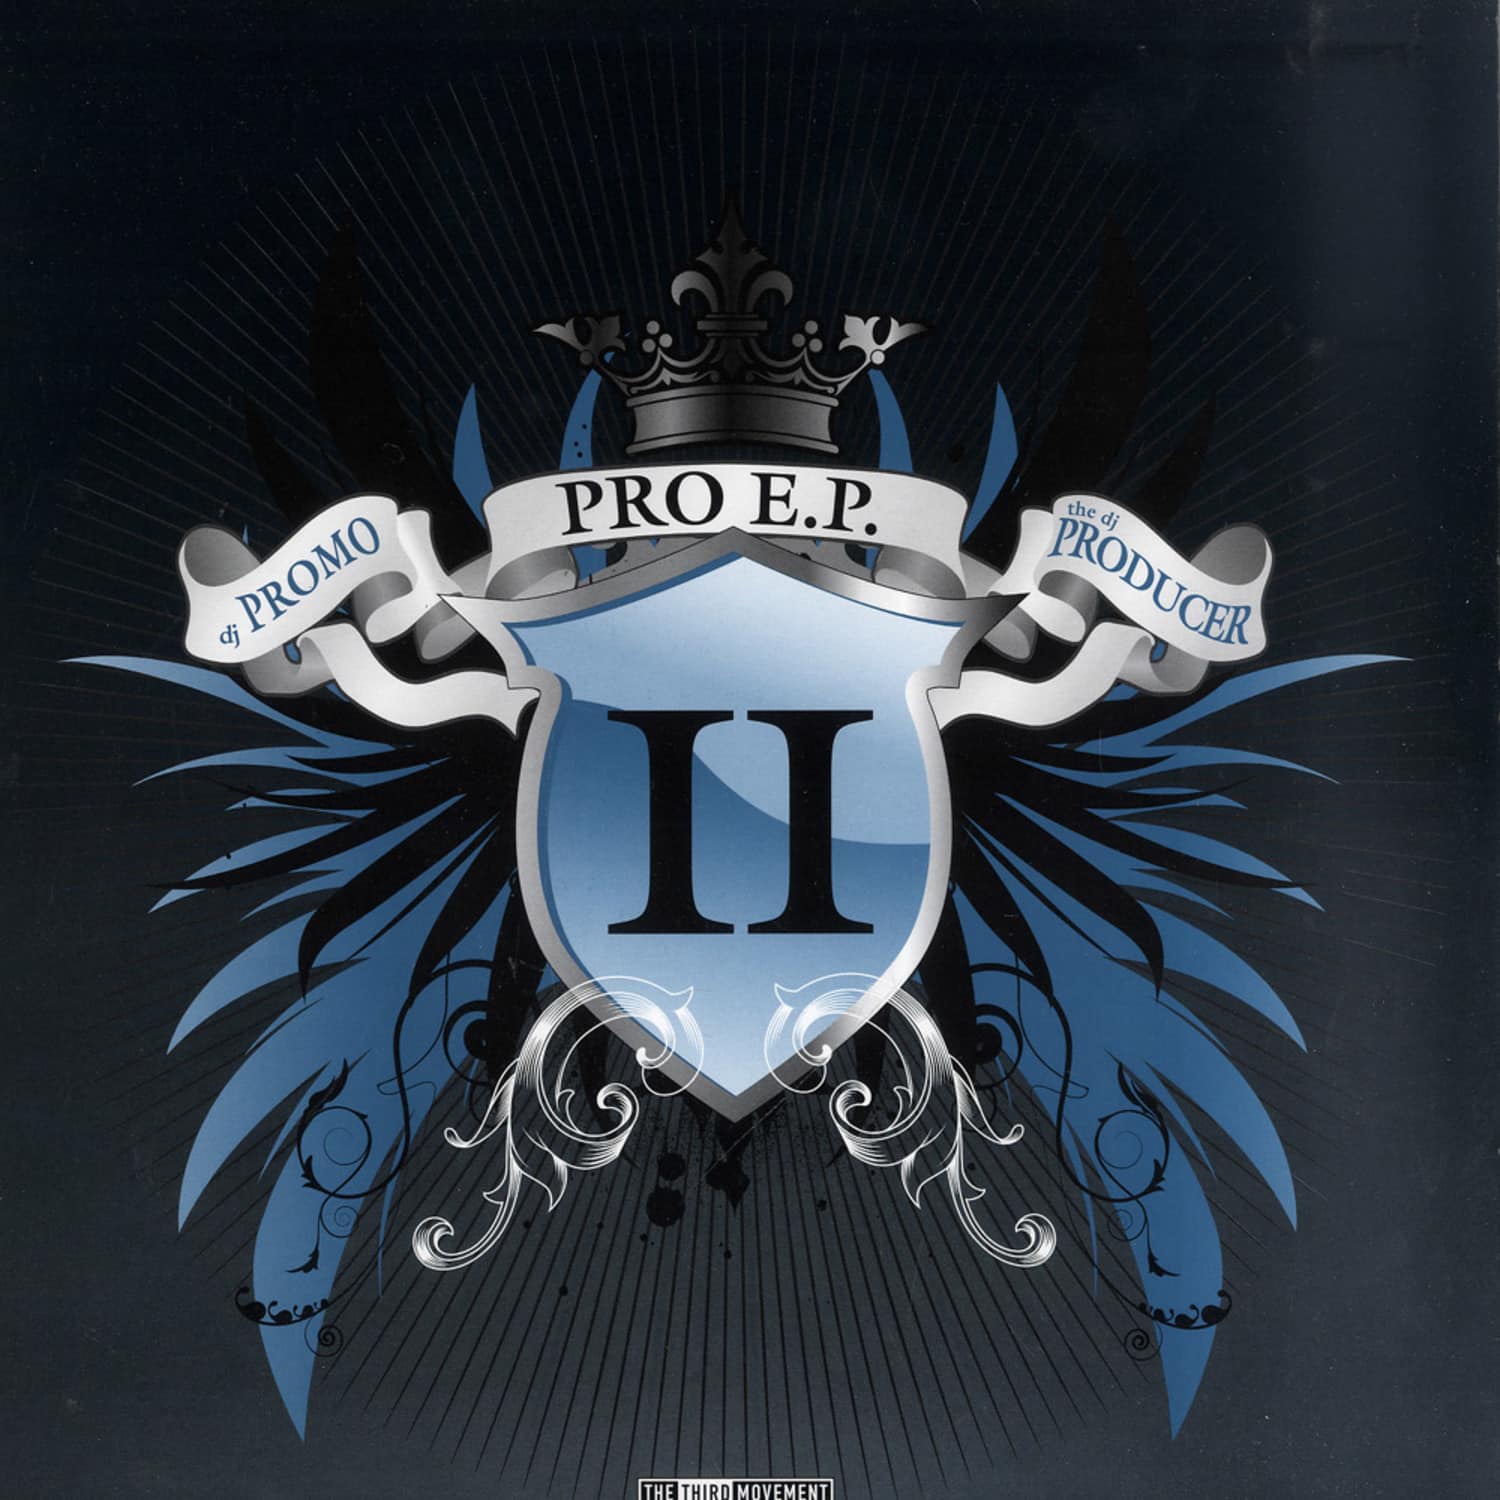 Dj Promo & The Dj Producer - PRO E.P. II